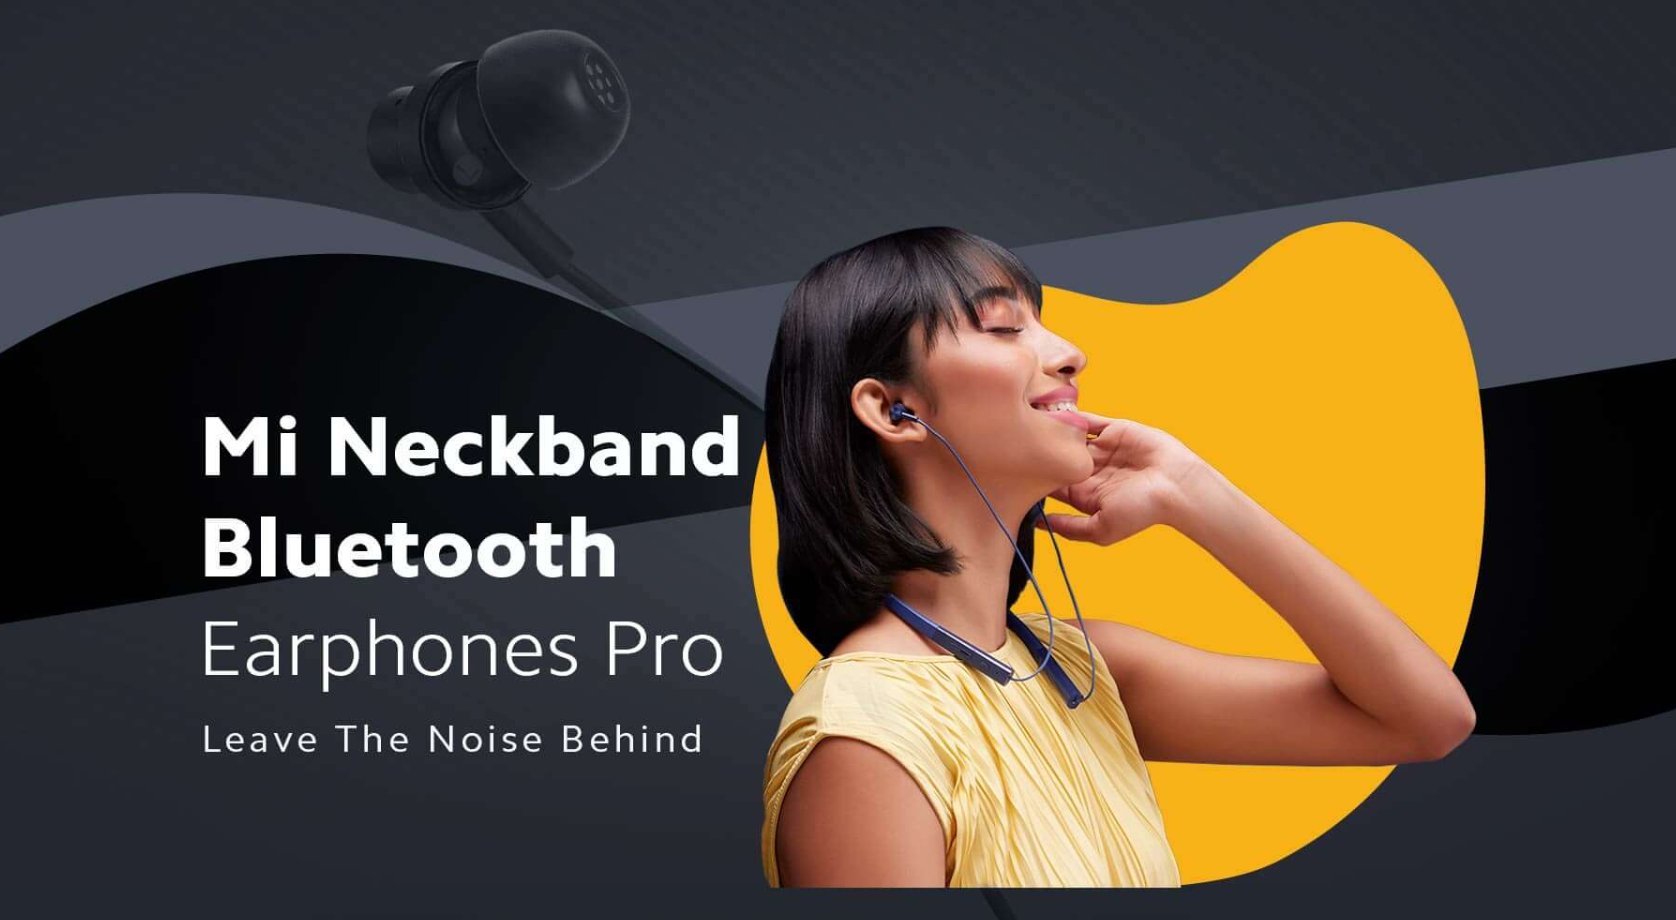 Mi Neckband Bluetooth Earphone Pro price in Nepal